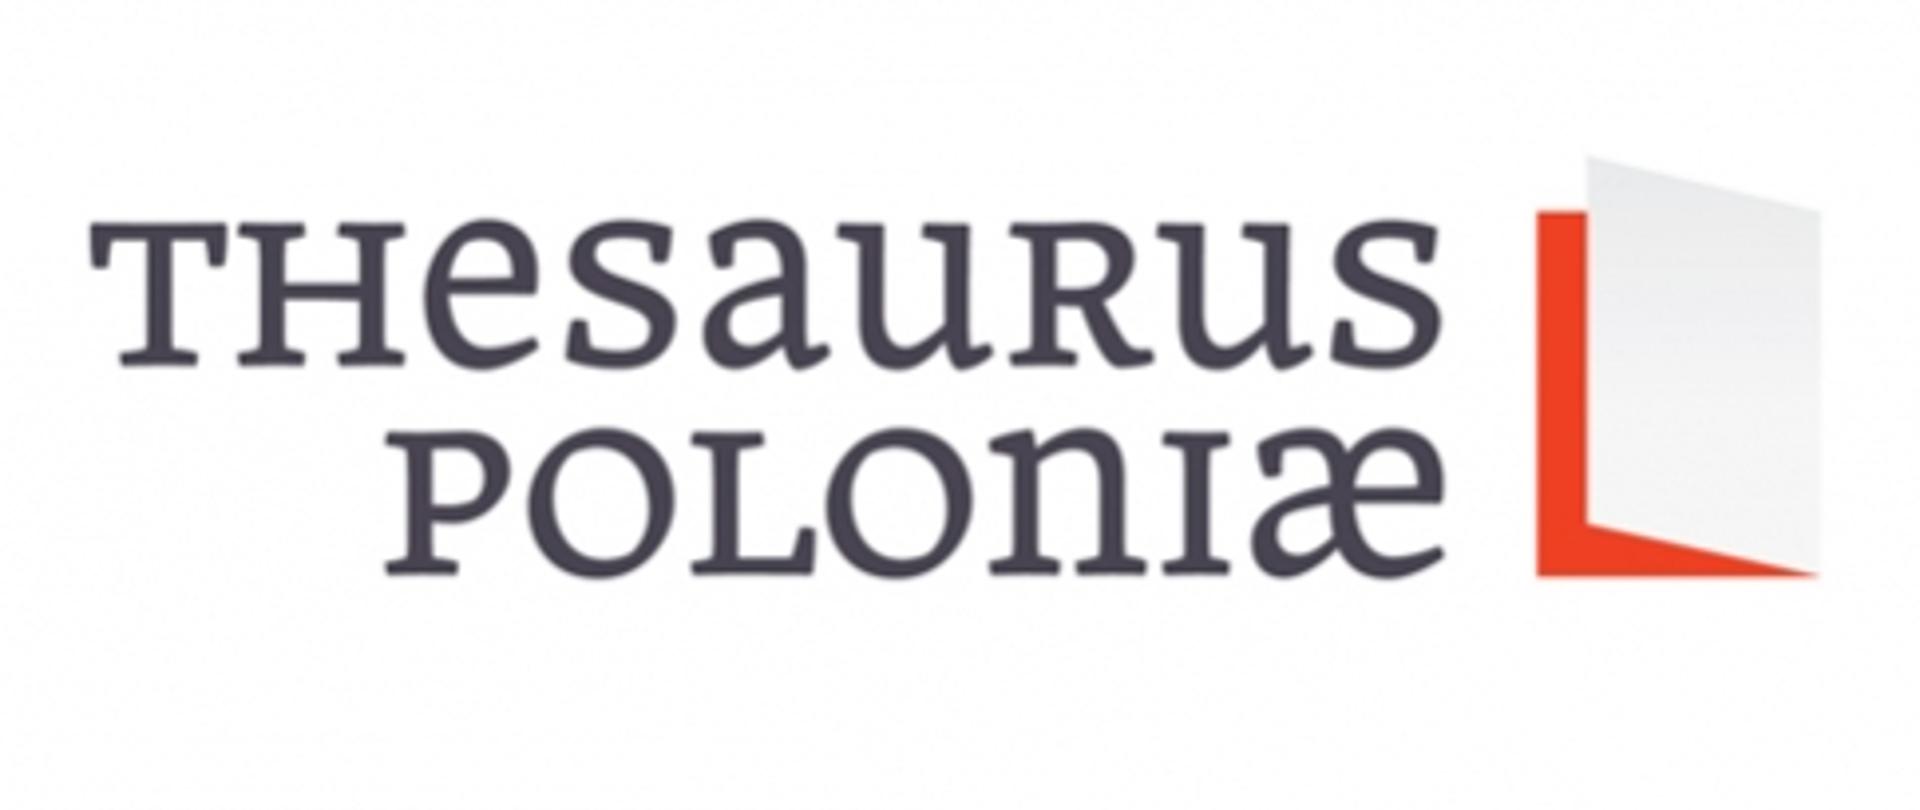 Thesaurus Poloniae 